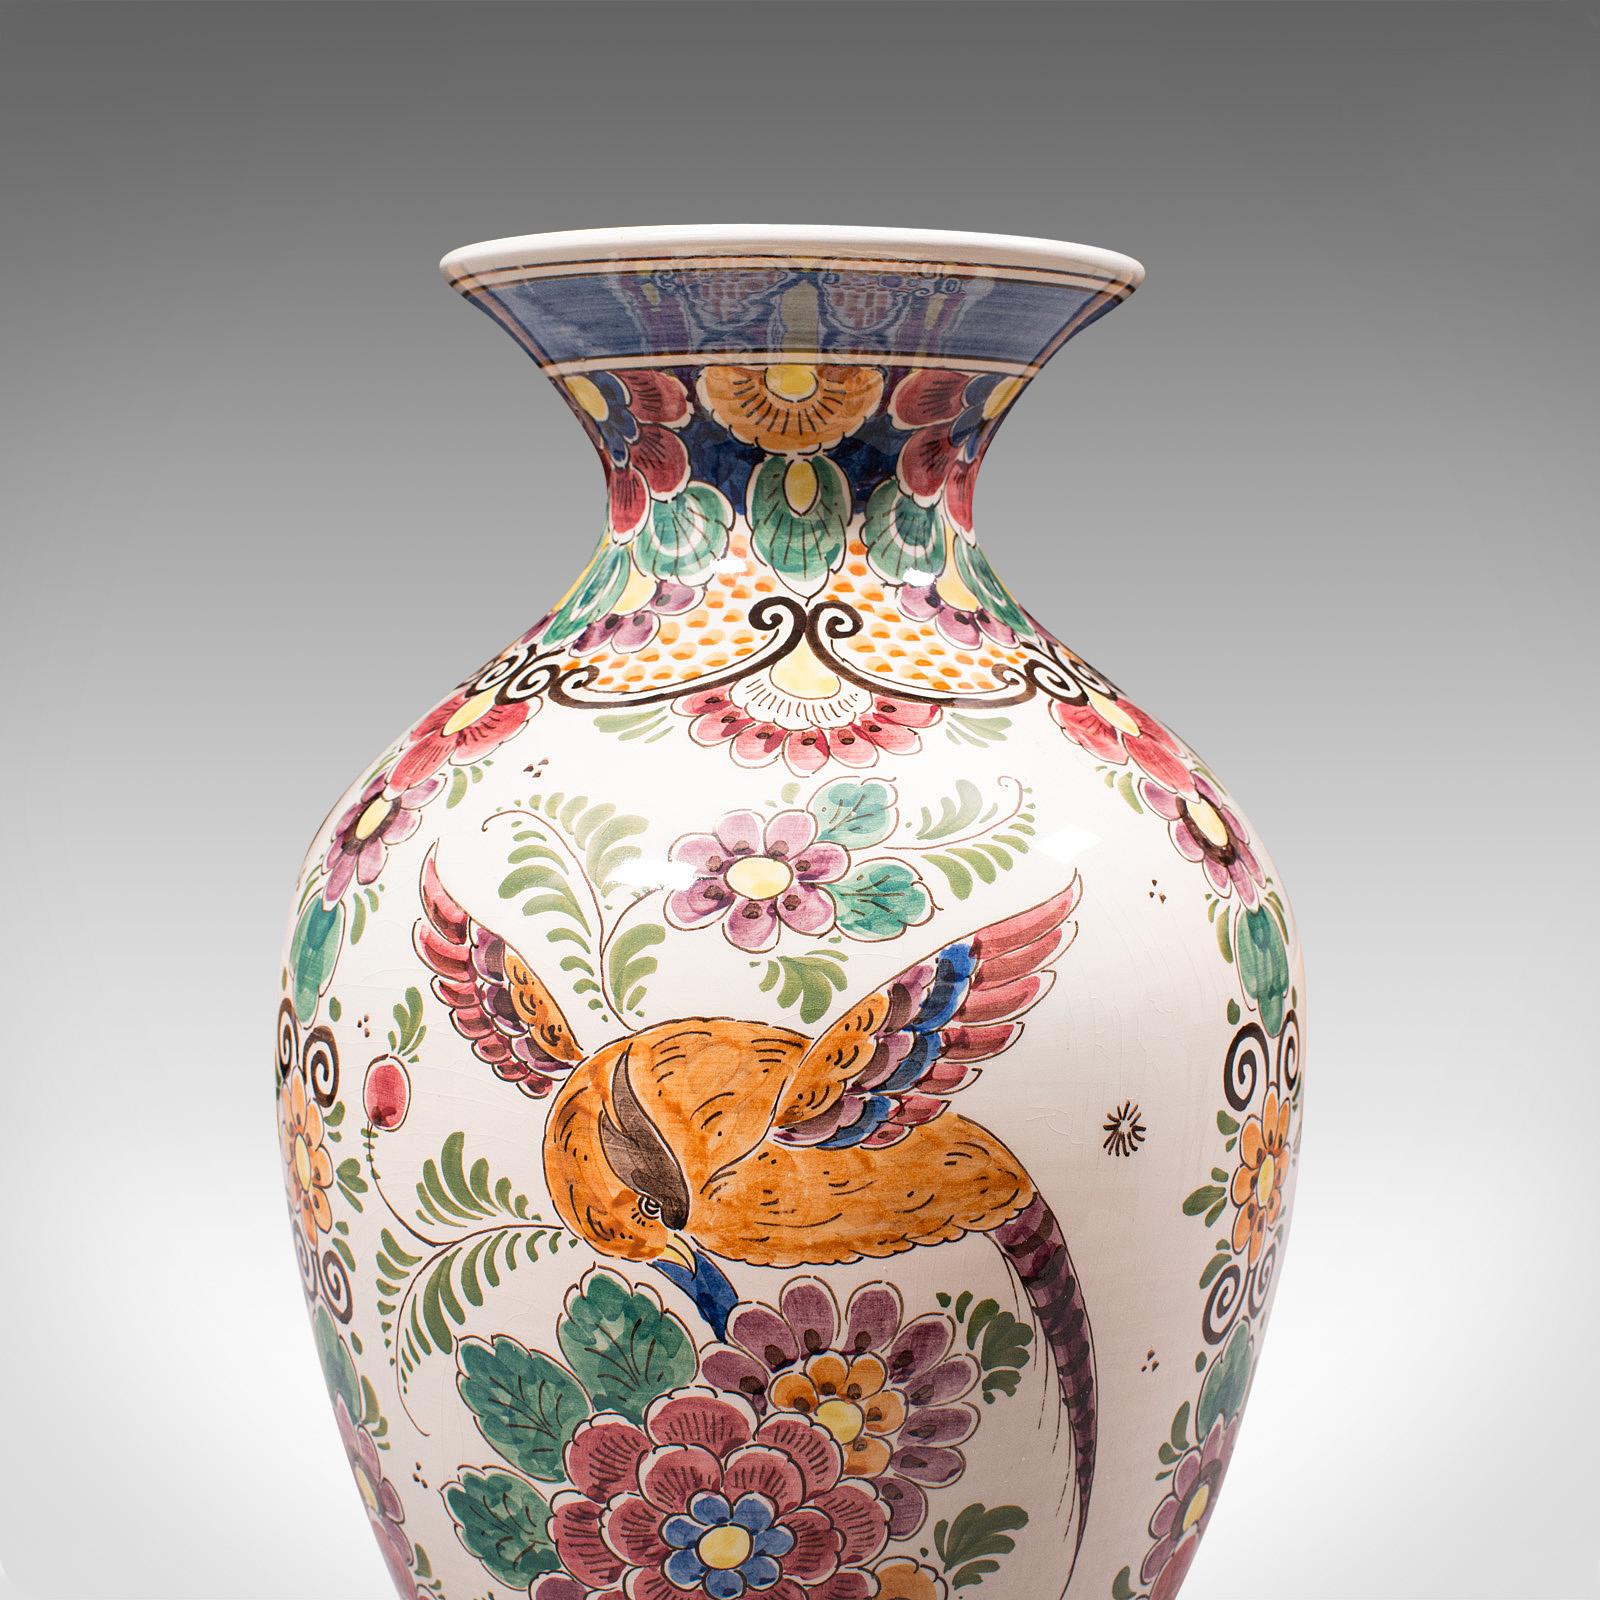 Vintage Polychromatic Vase, Dutch, Delft, Ceramic, Ornament, Mid 20th.C, C.1960 For Sale 5